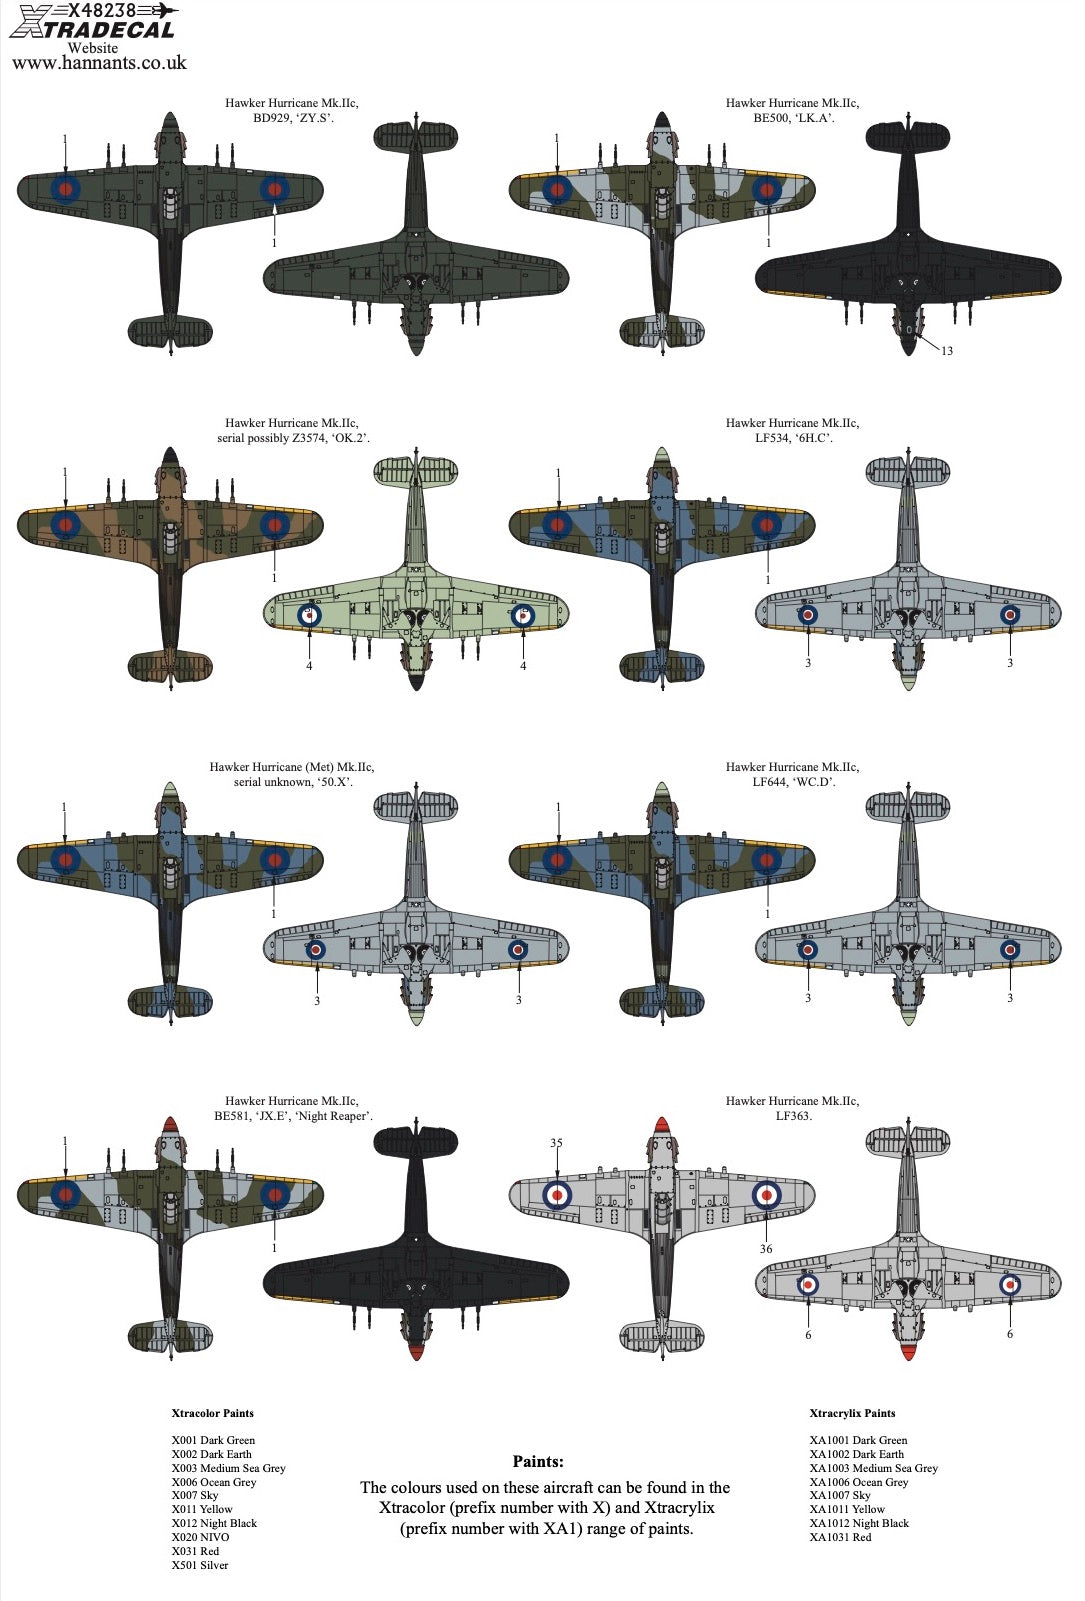 Xtradecal X48238 Hawker Hurricane Mk.IIc Collection 1/48